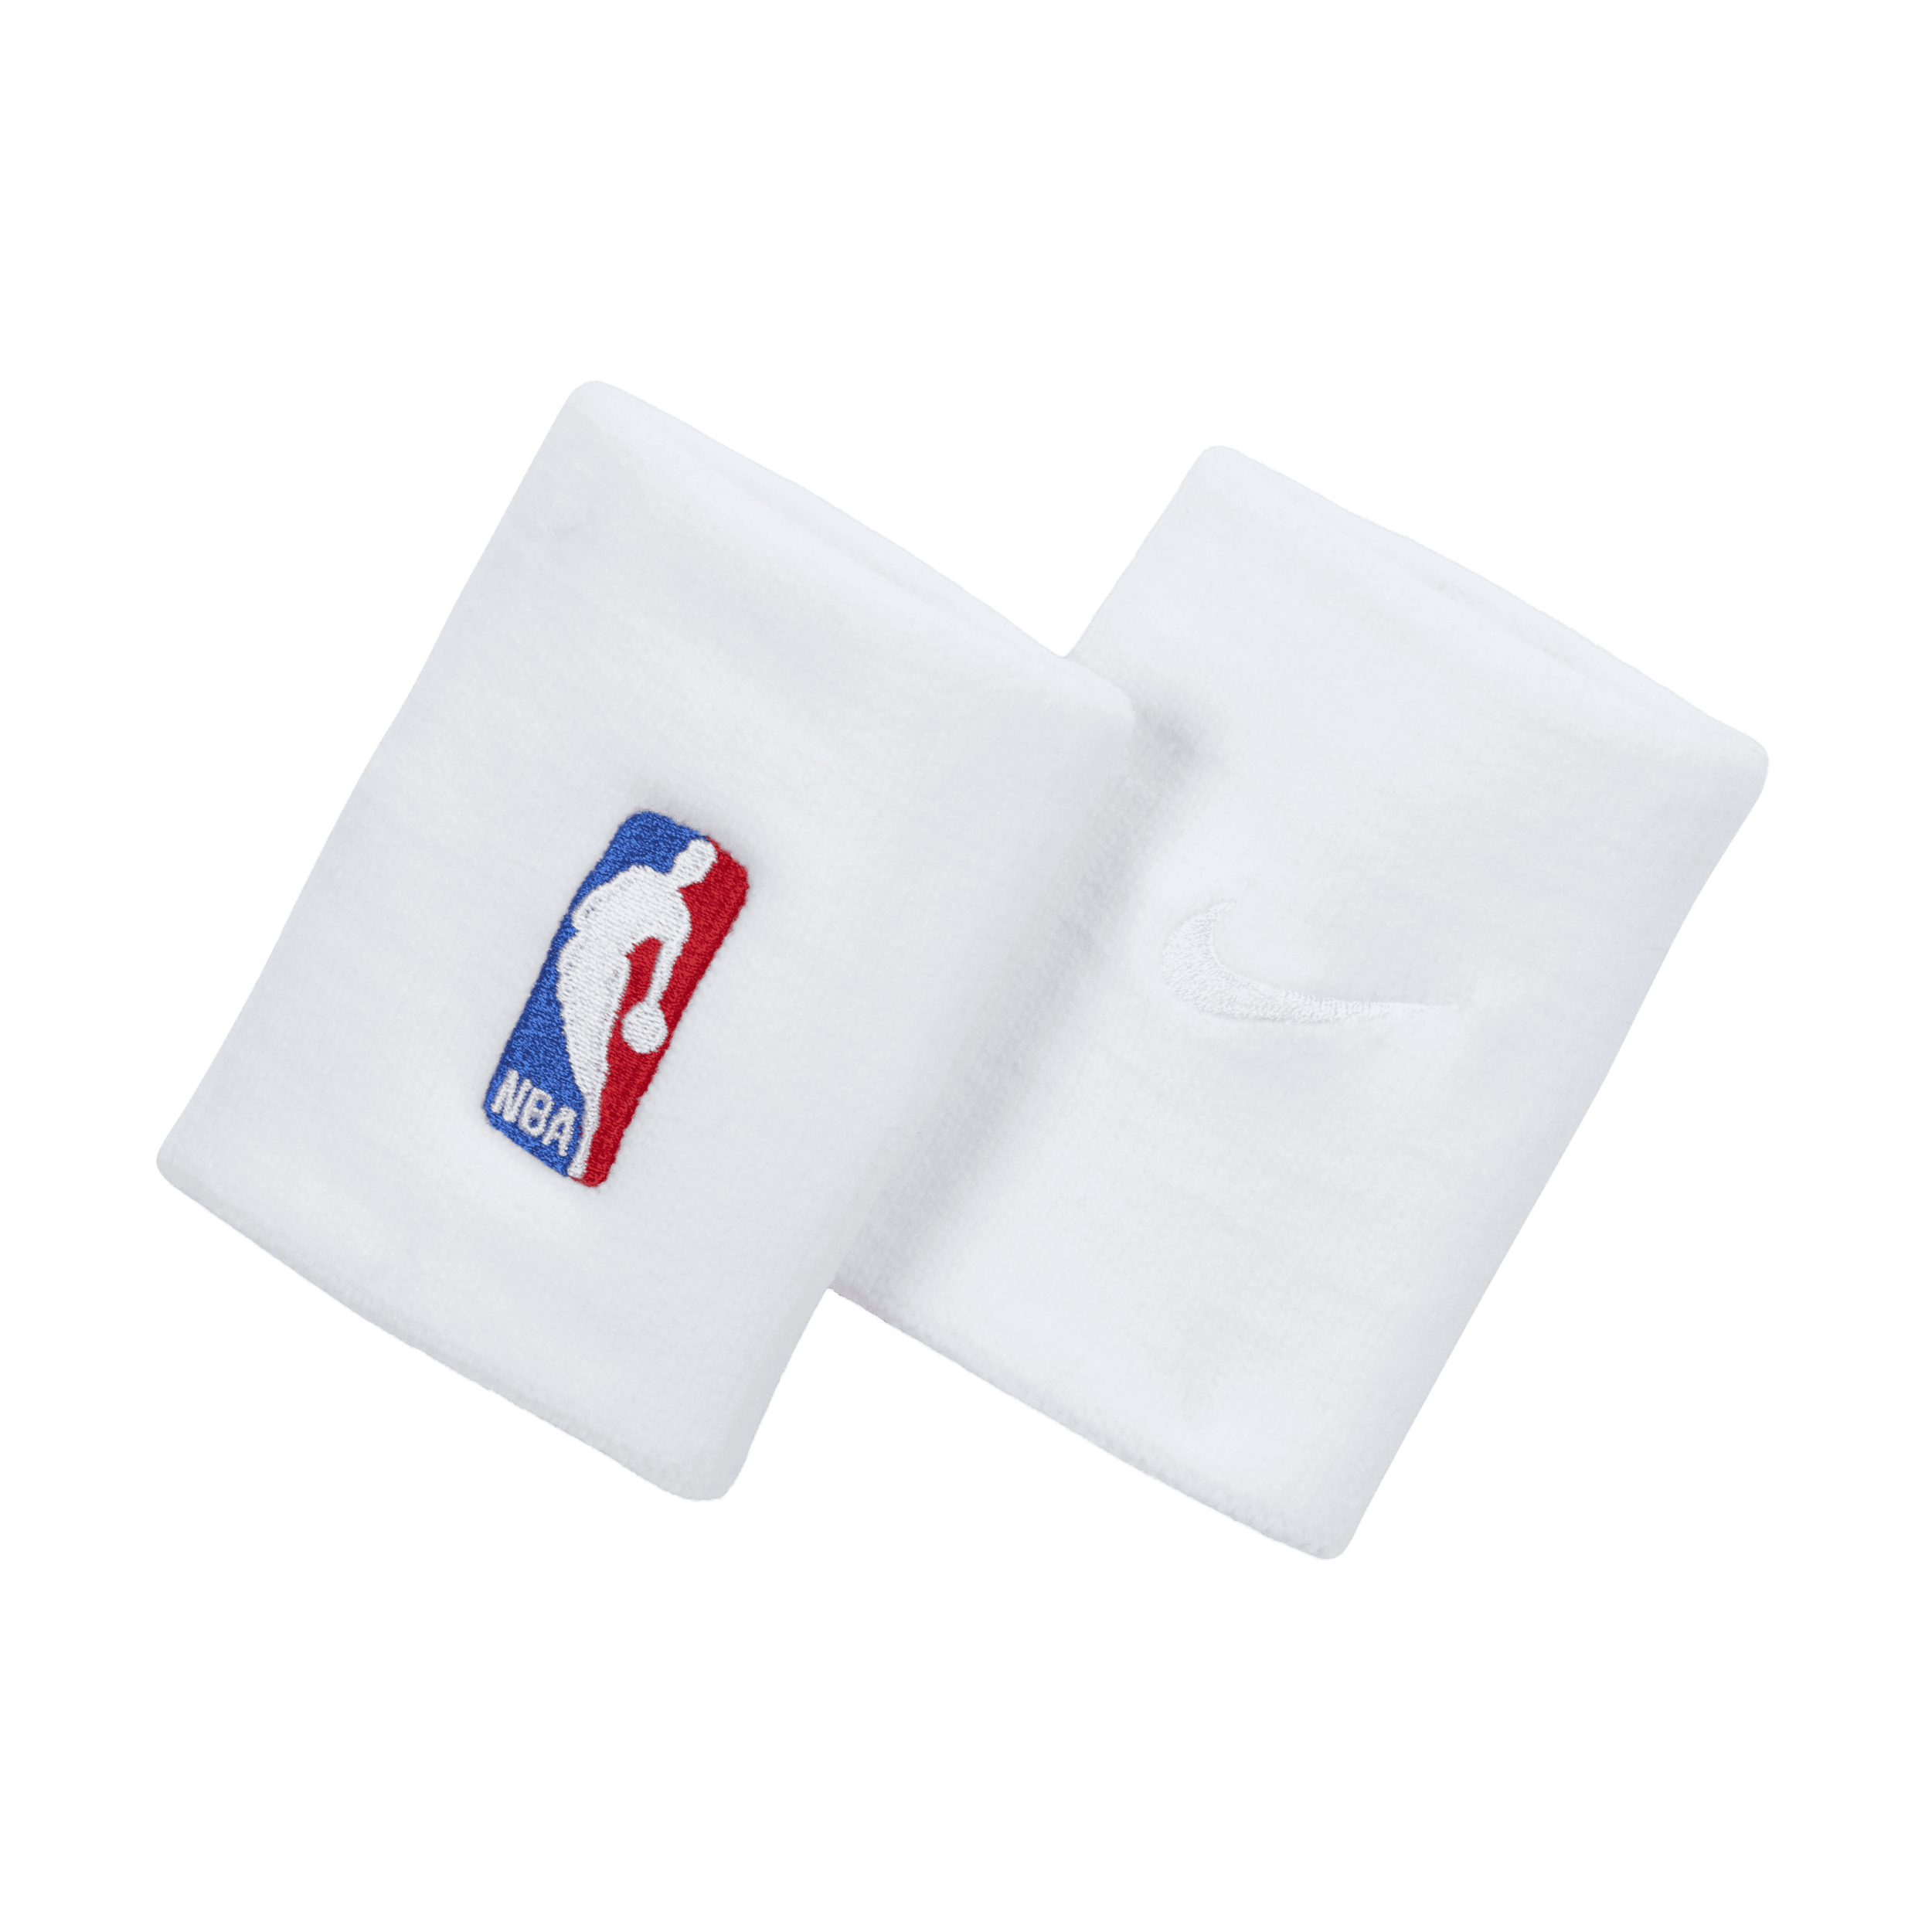 NBA Nike Dri-FIT polsbandjes voor basketbal (1 paar) - Wit